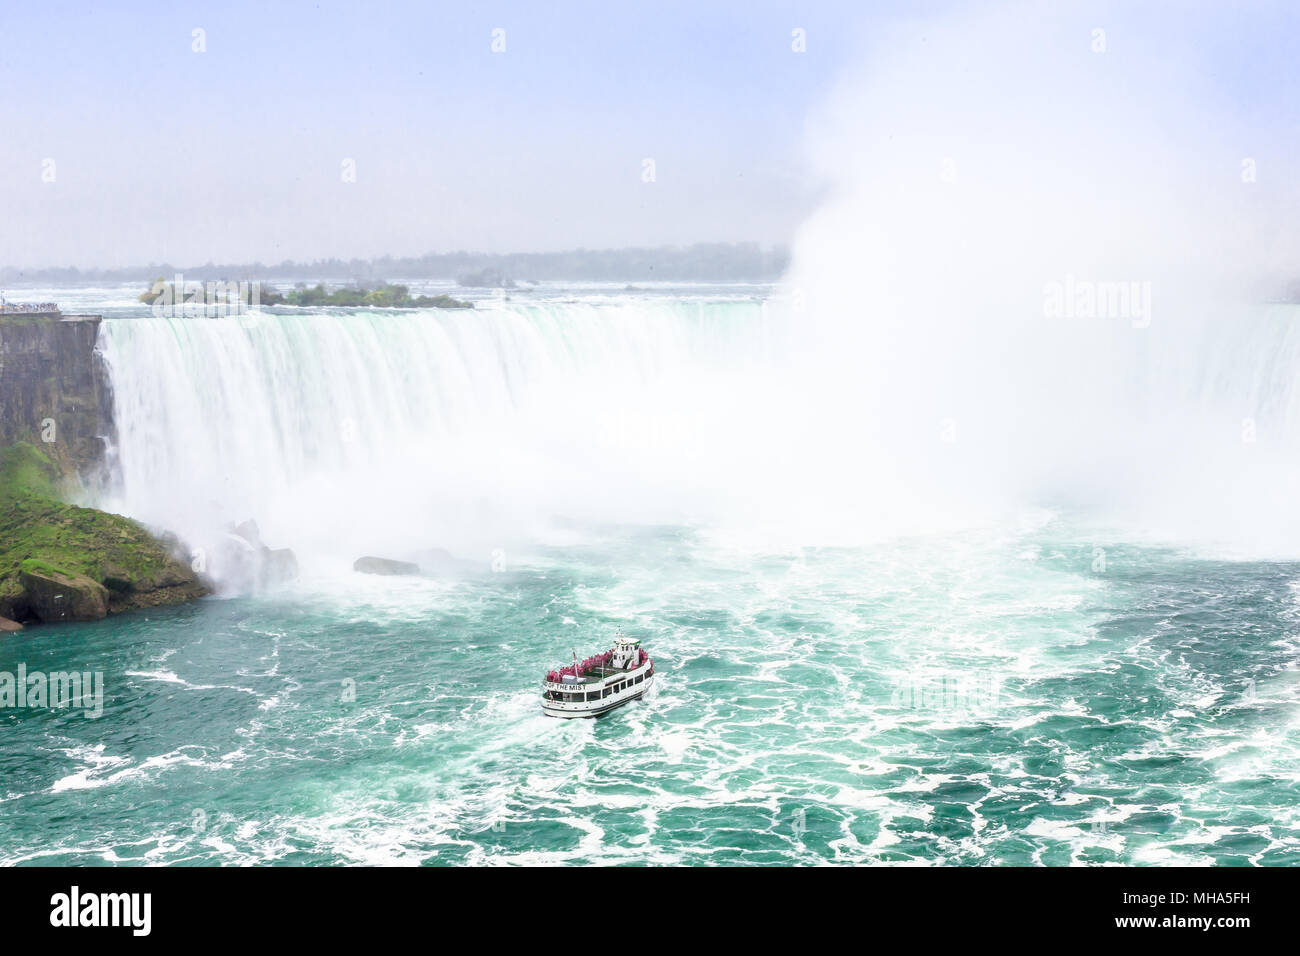 Niagara falls between United States of America and Canada. North America. Stock Photo